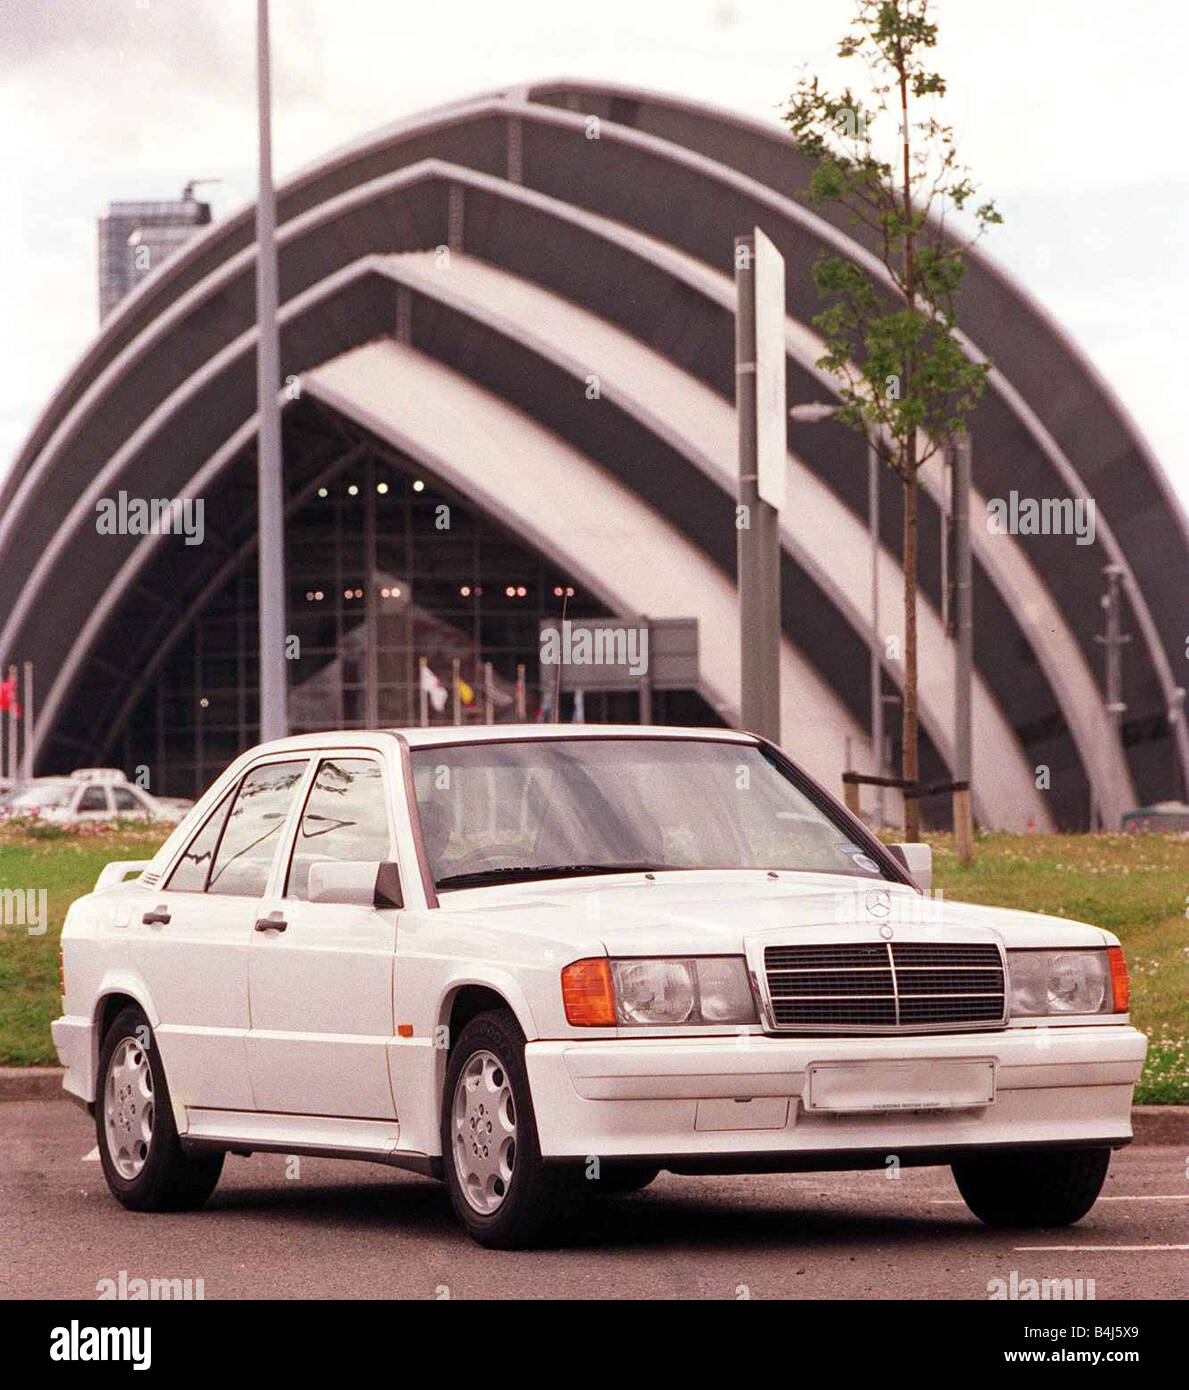 https://c8.alamy.com/comp/B4J5X9/mercedes-190-e-july-1998-used-car-feature-white-car-road-record-supplement-B4J5X9.jpg